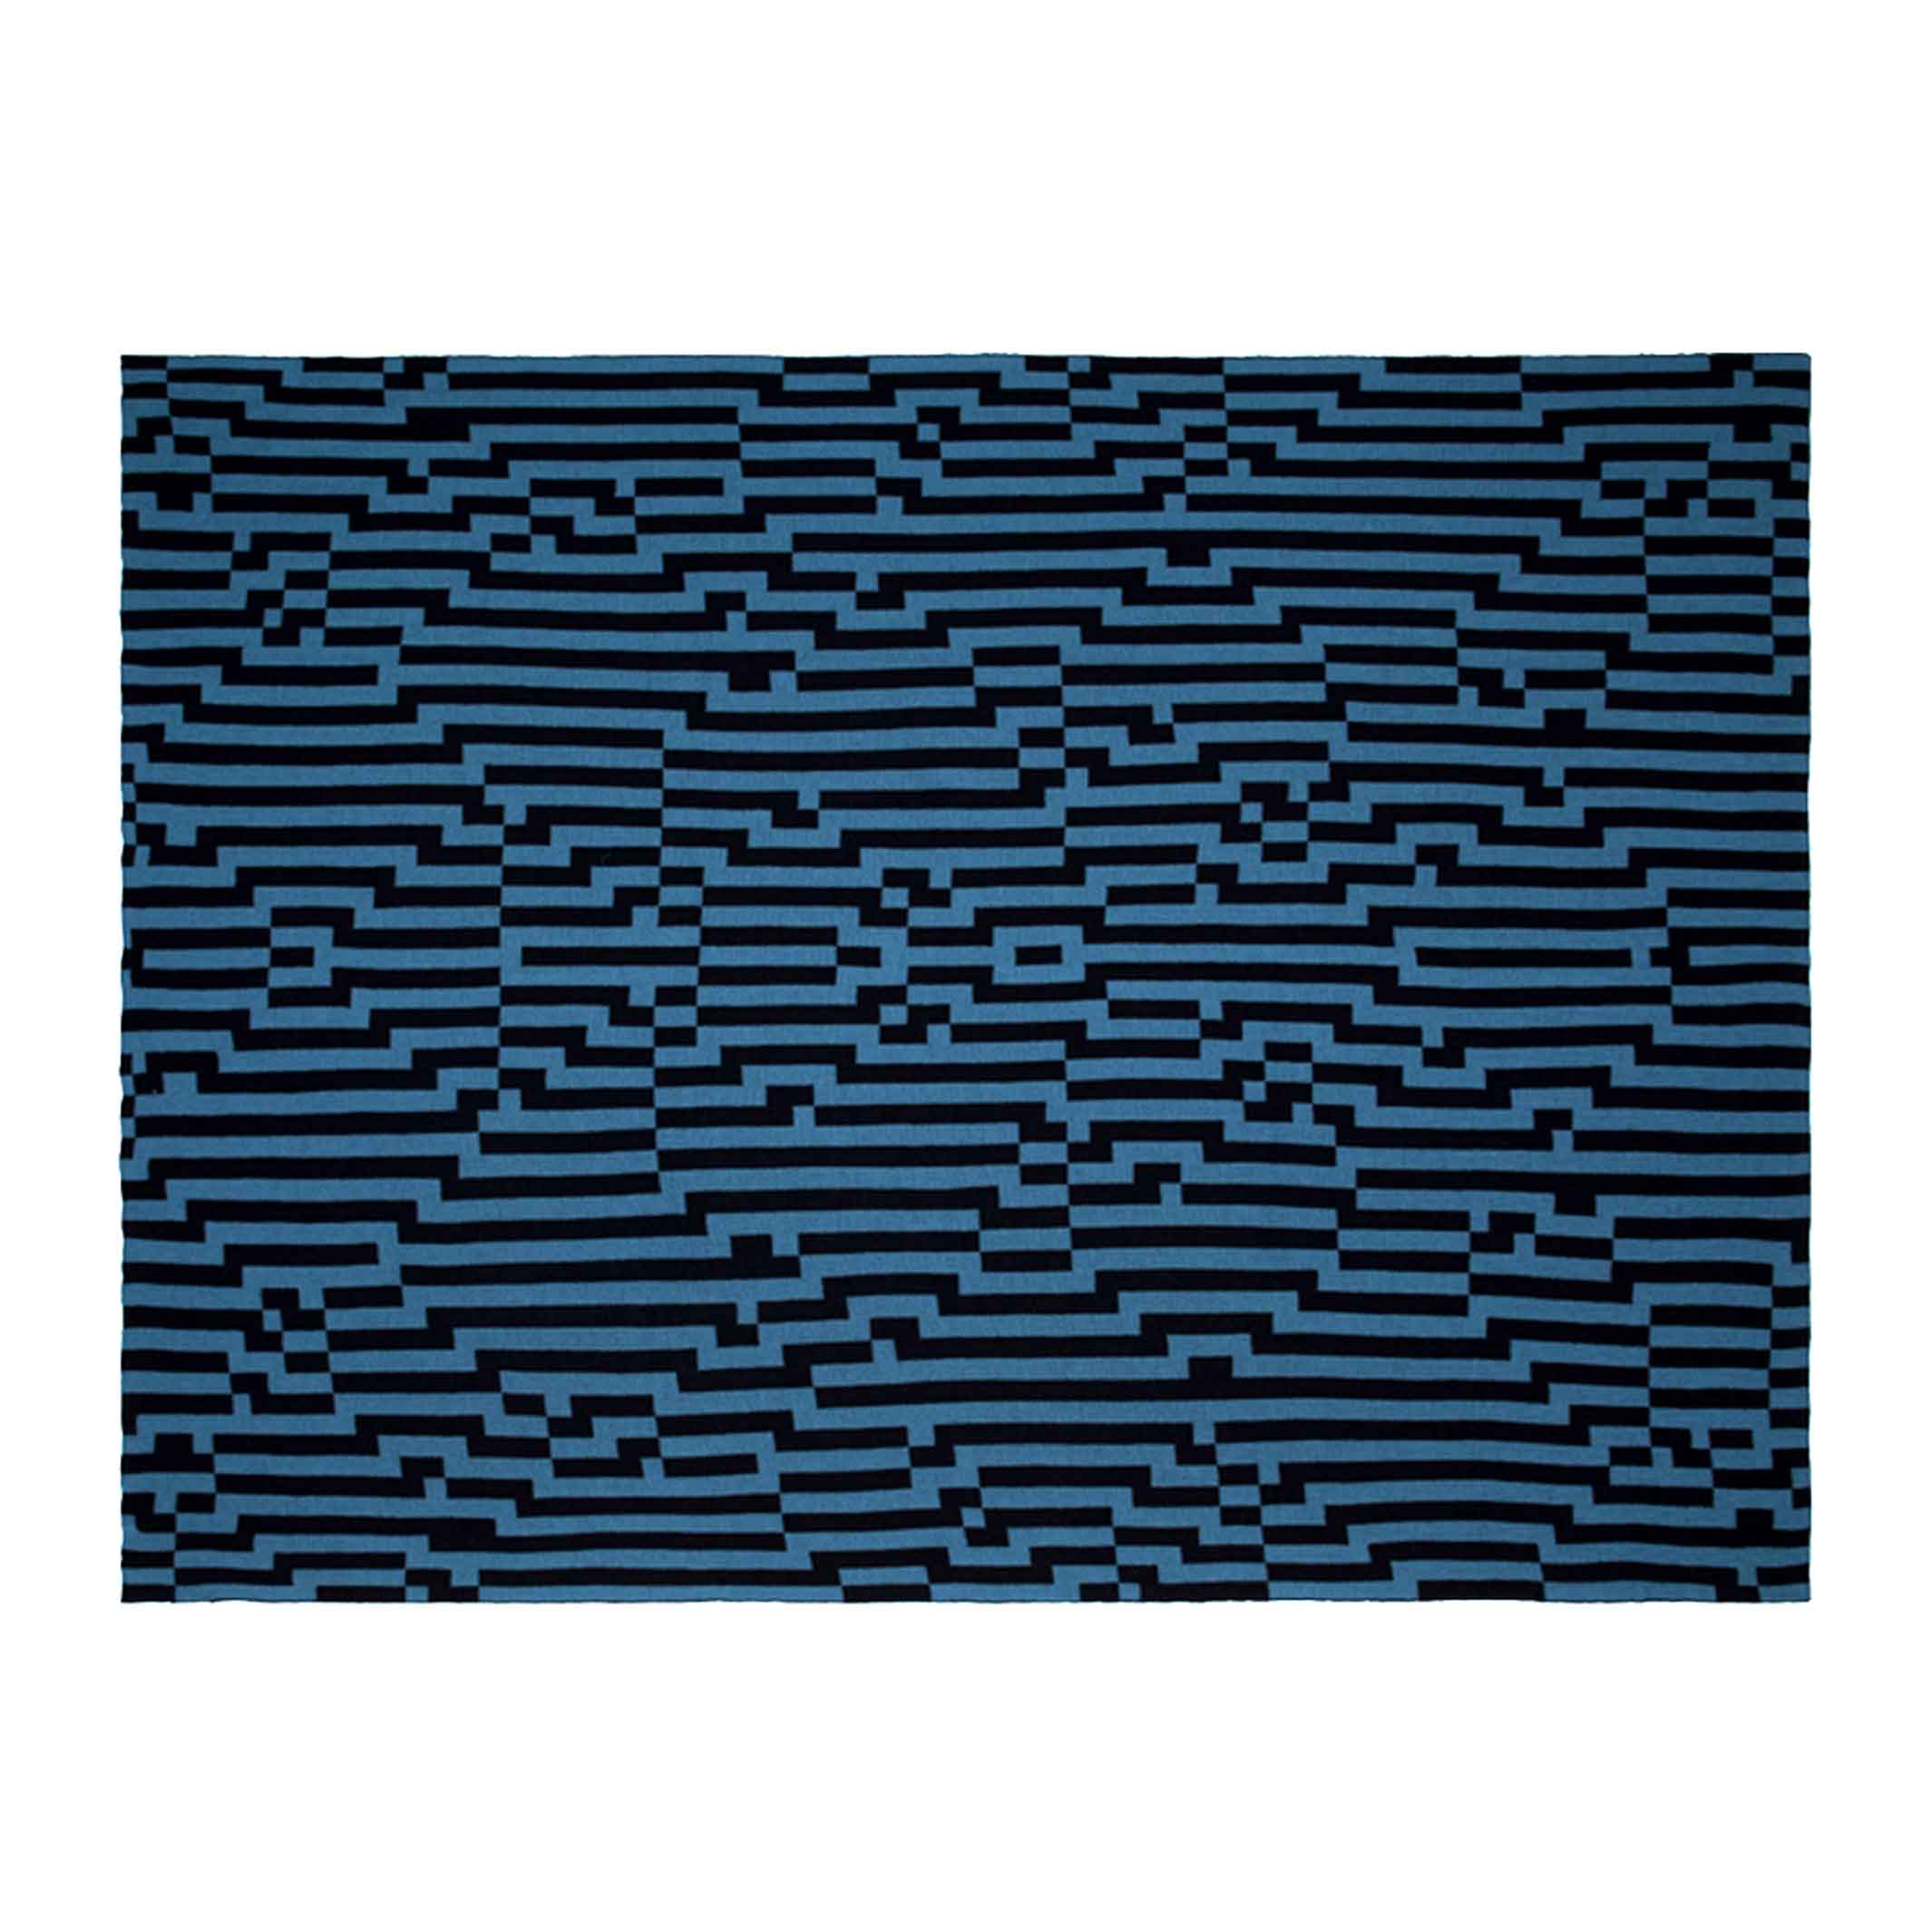 BITMAP ZOOM IN 5 | blau & schwarze TAGESDECKE | 180x140 cm | 100% Merino Wolle | Cristian Zuzunaga